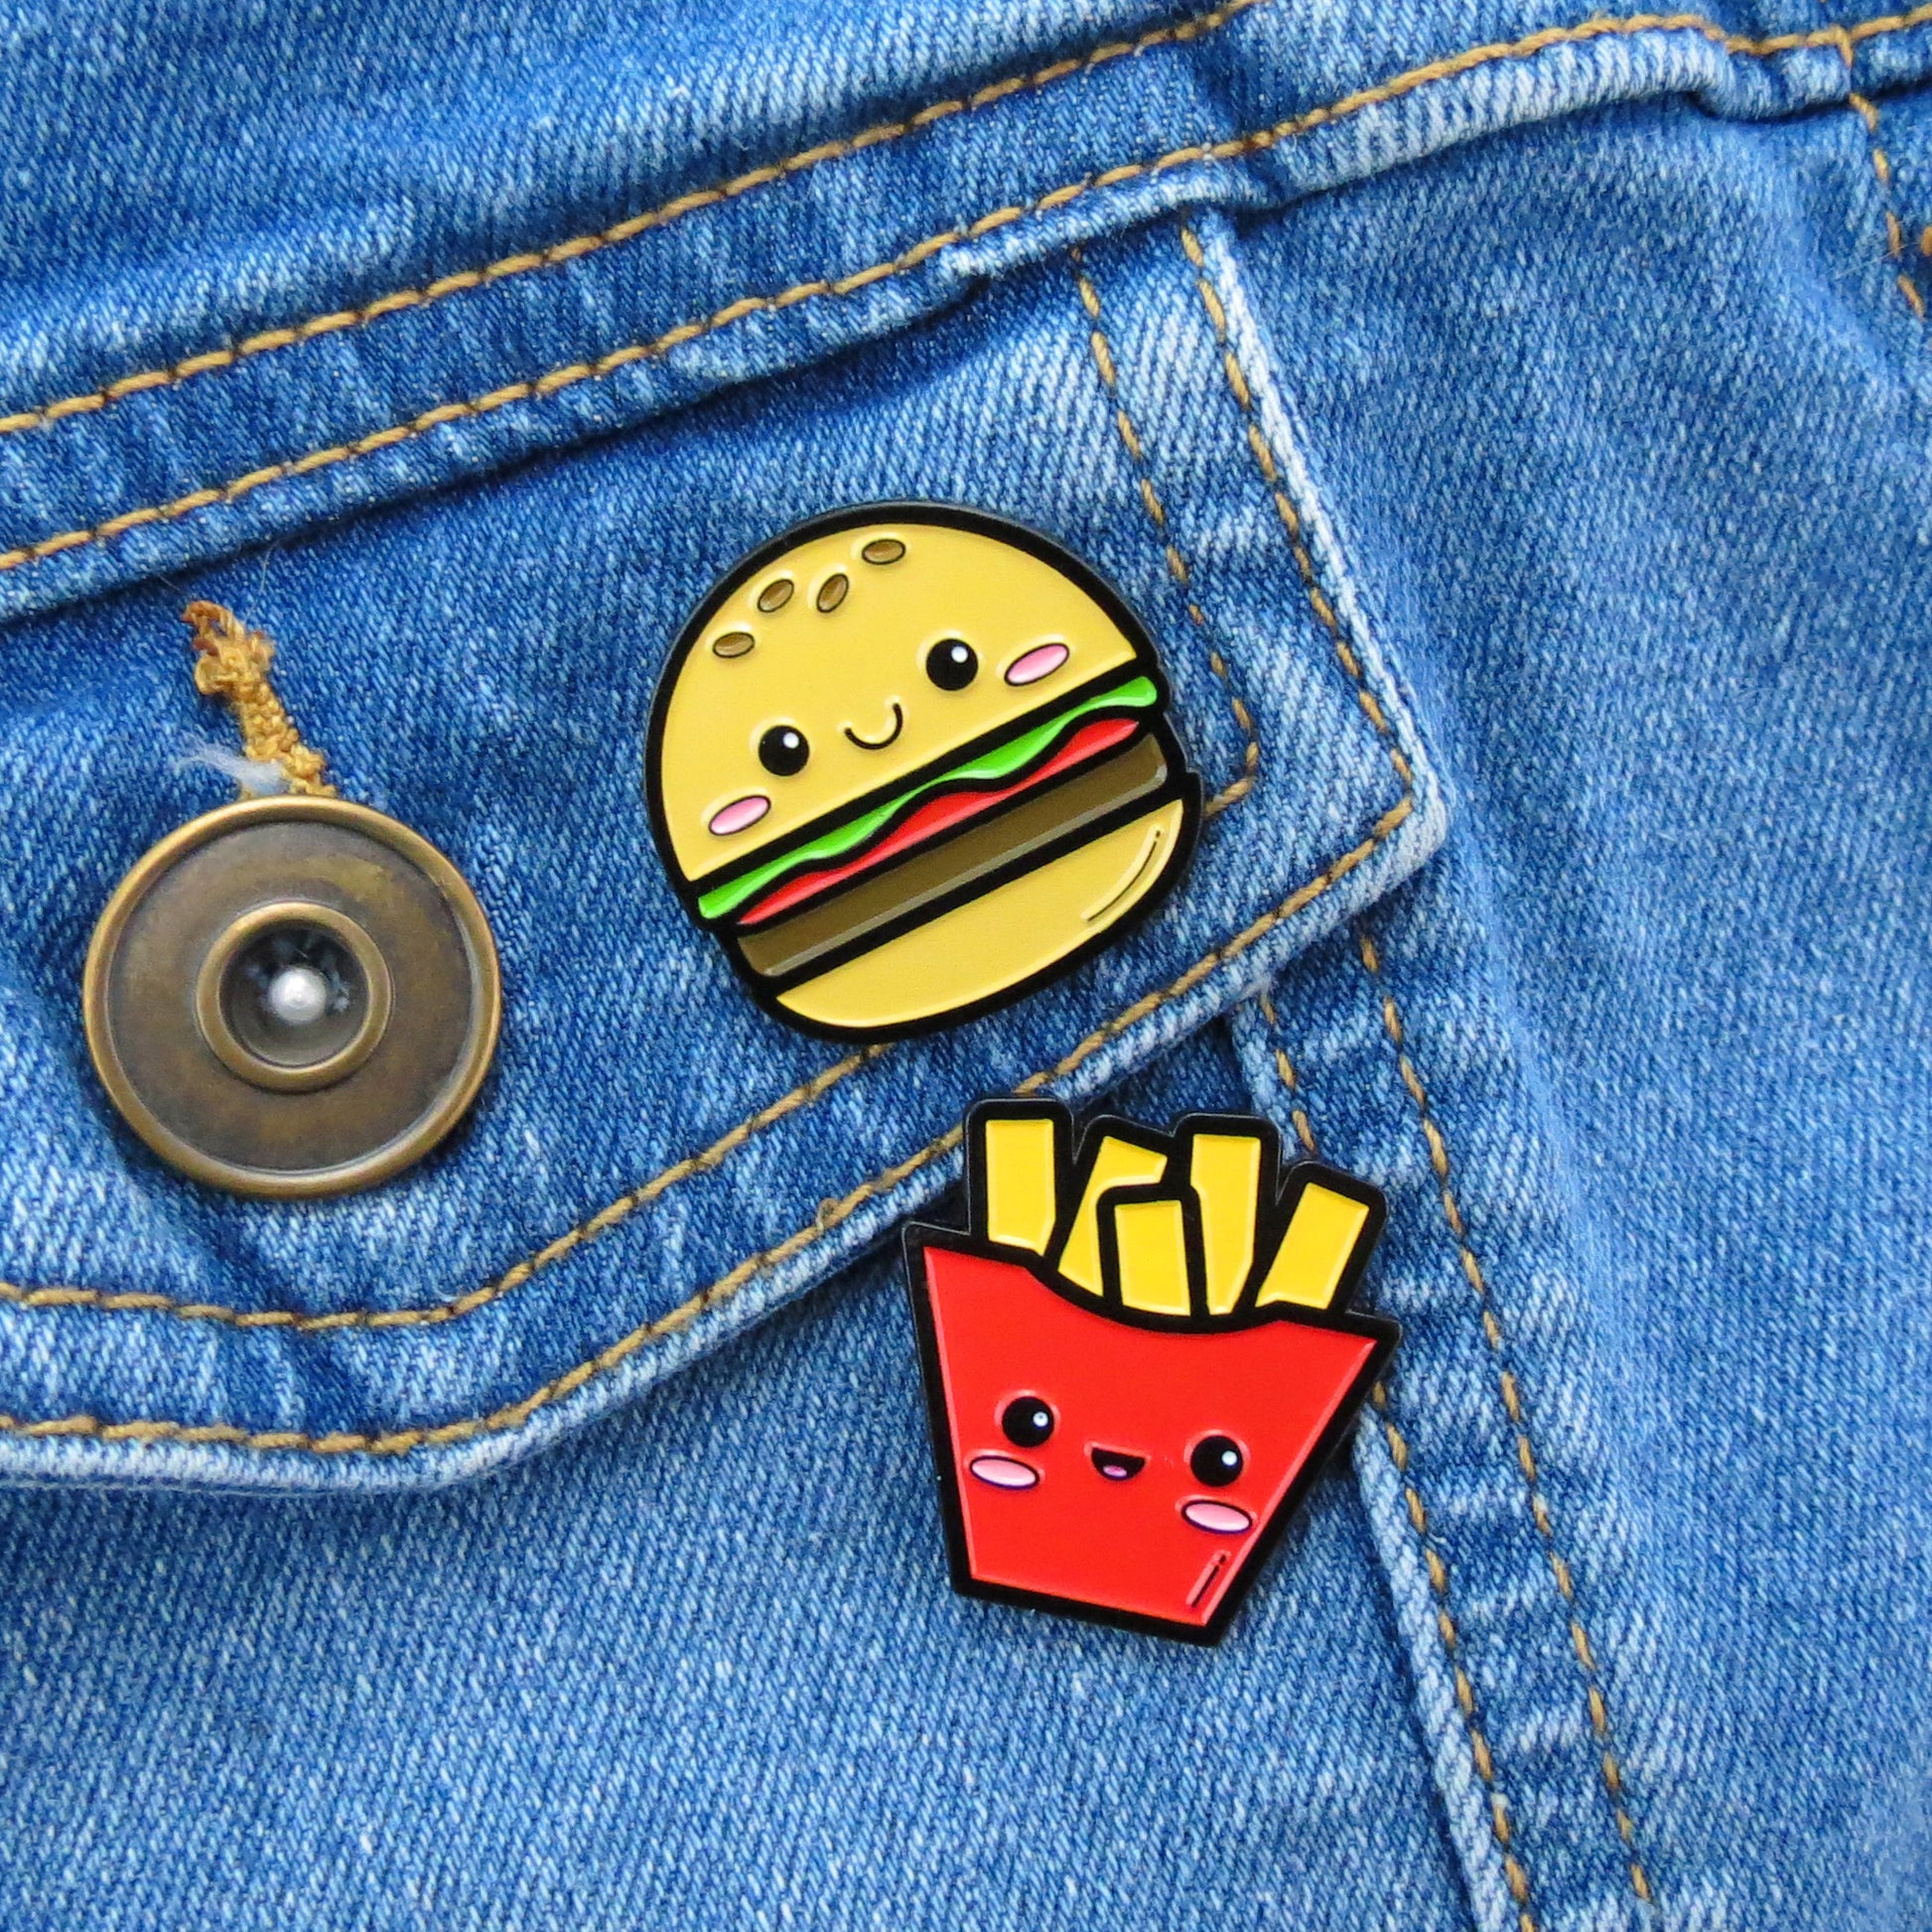 Burger and Fries enamel pin set on jean jacket pocket